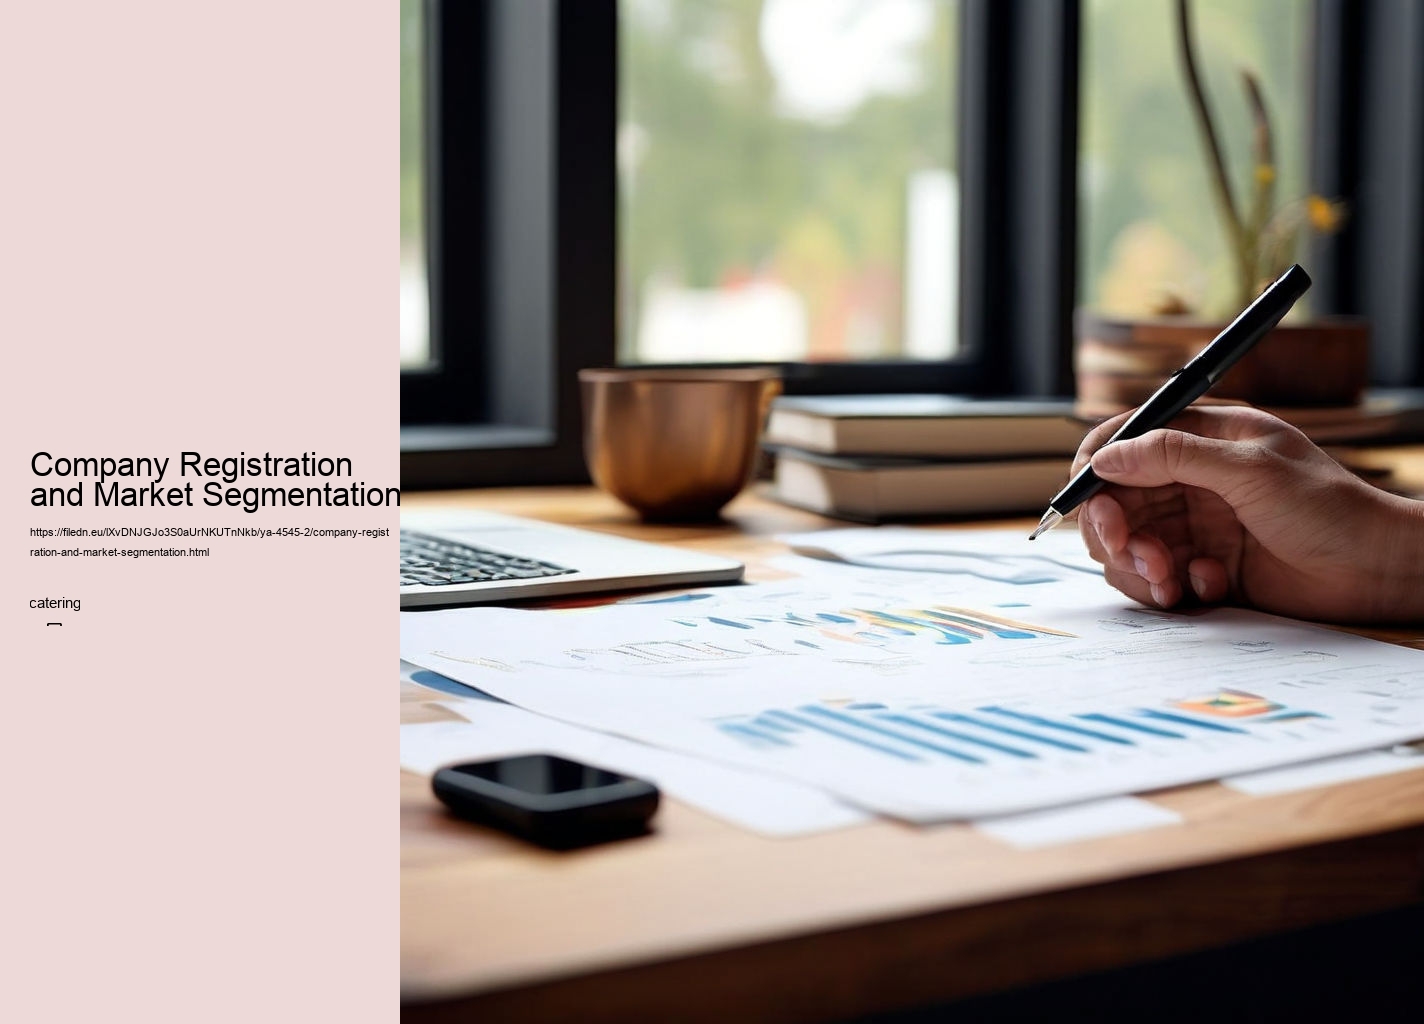 Company Registration and Market Segmentation